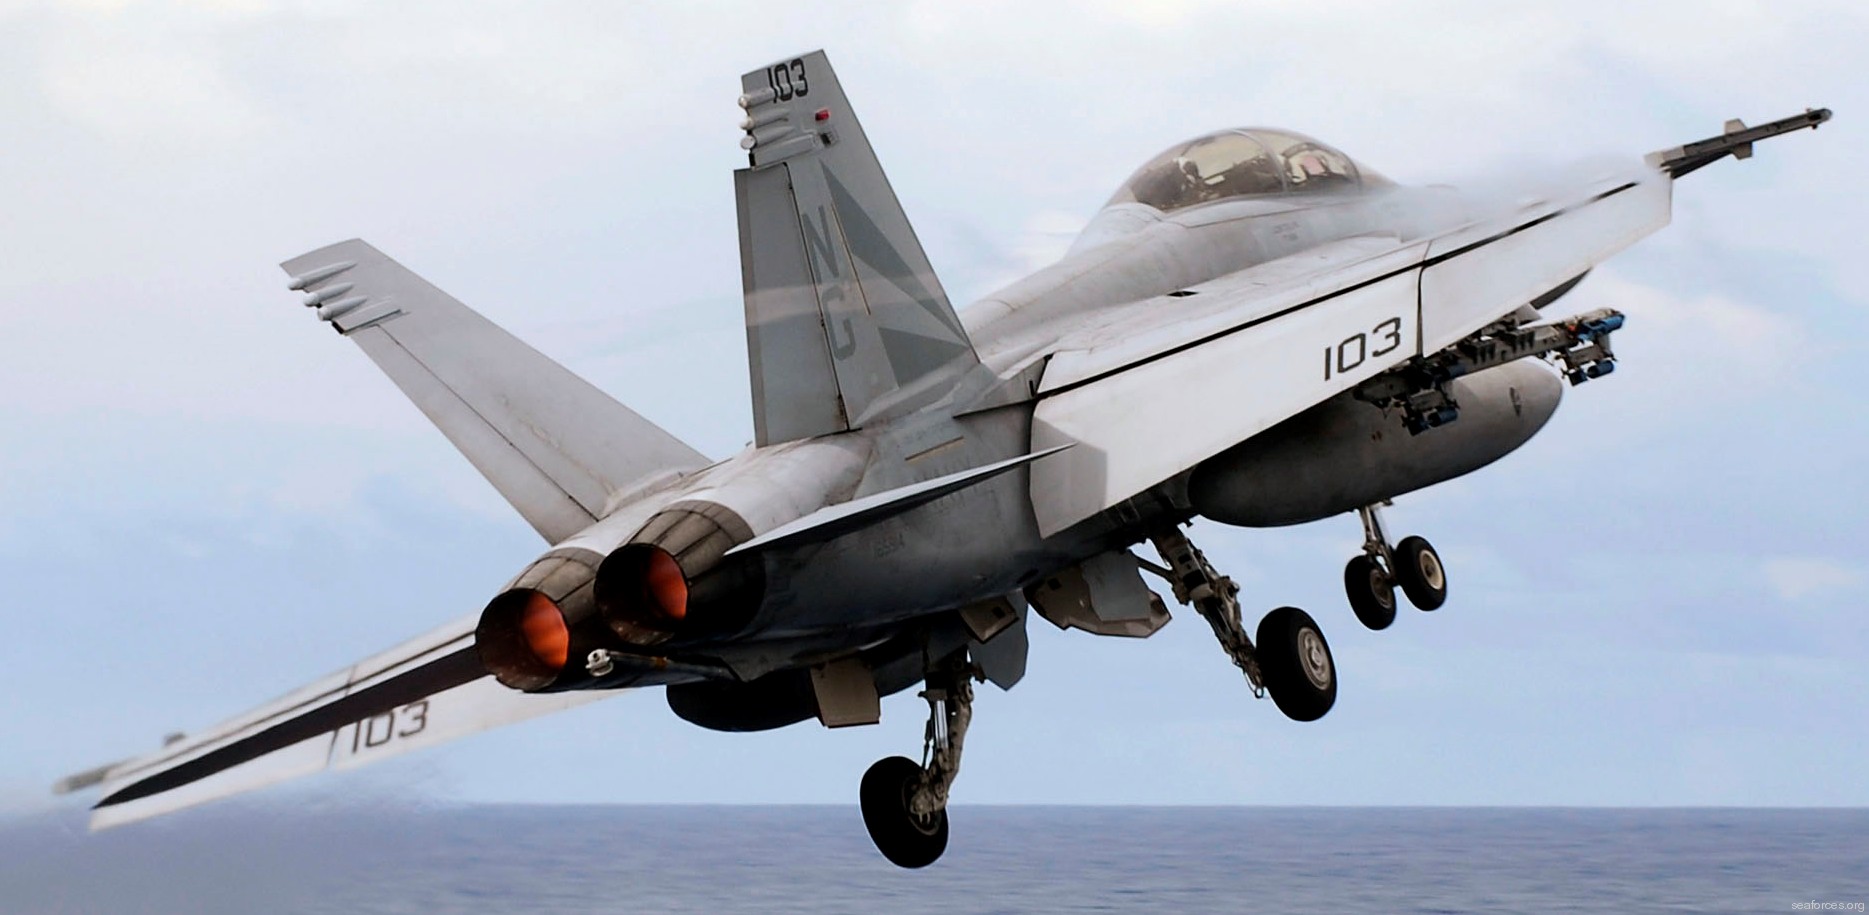 vfa-154 black knights strike fighter squadron navy f/a-18f super hornet carrier air wing cvw-9 uss john c. stennis cvn-70 109